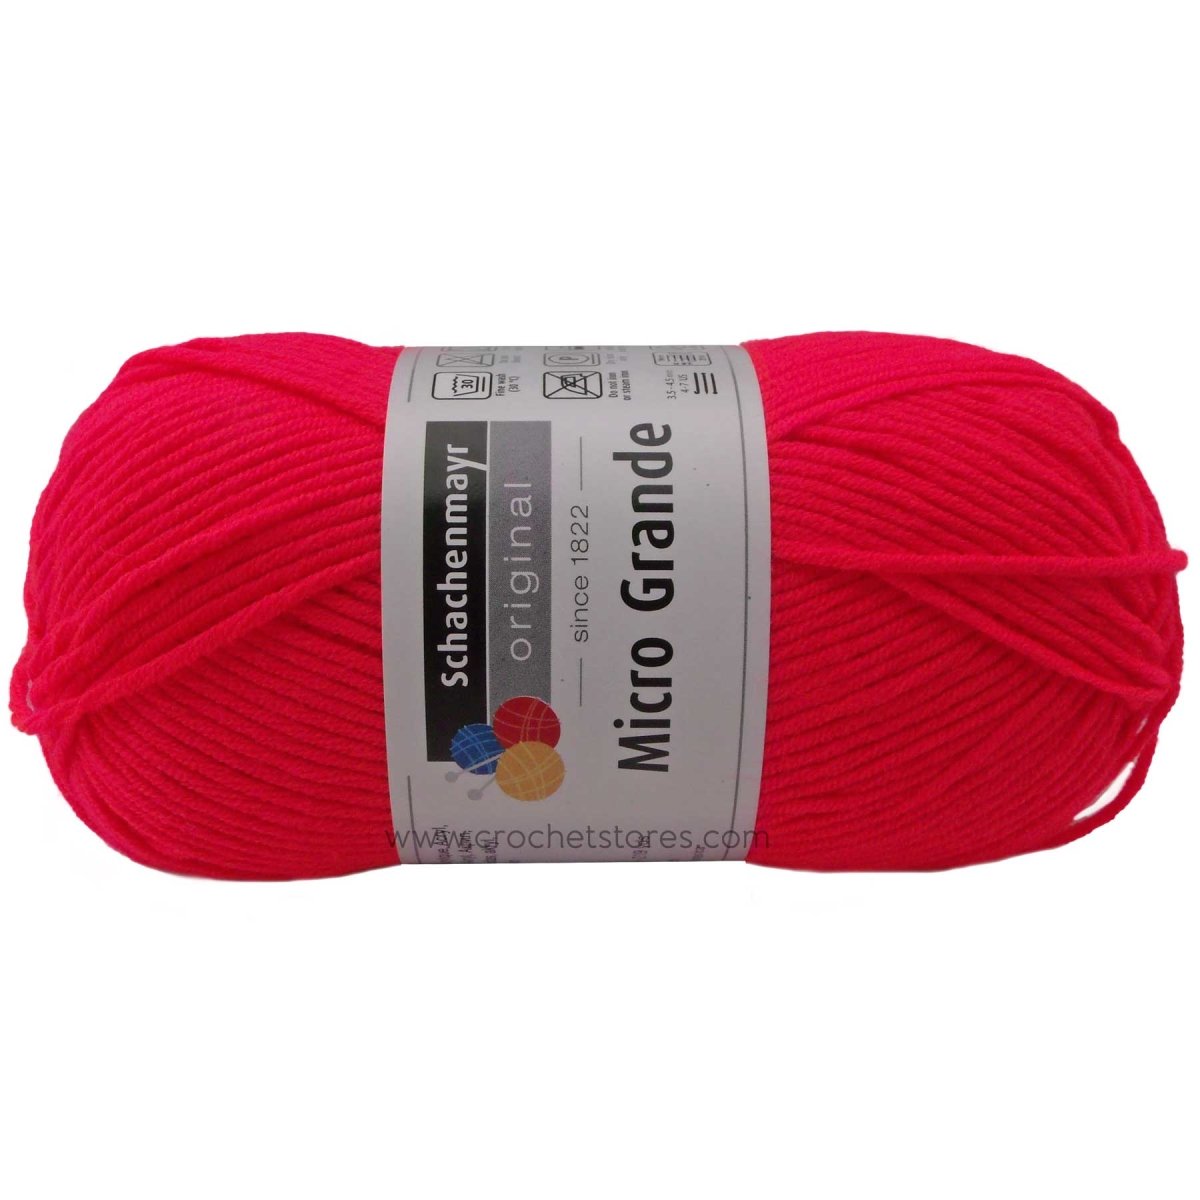 MICRO GRANDE - Crochetstores9807313-1314053859012386